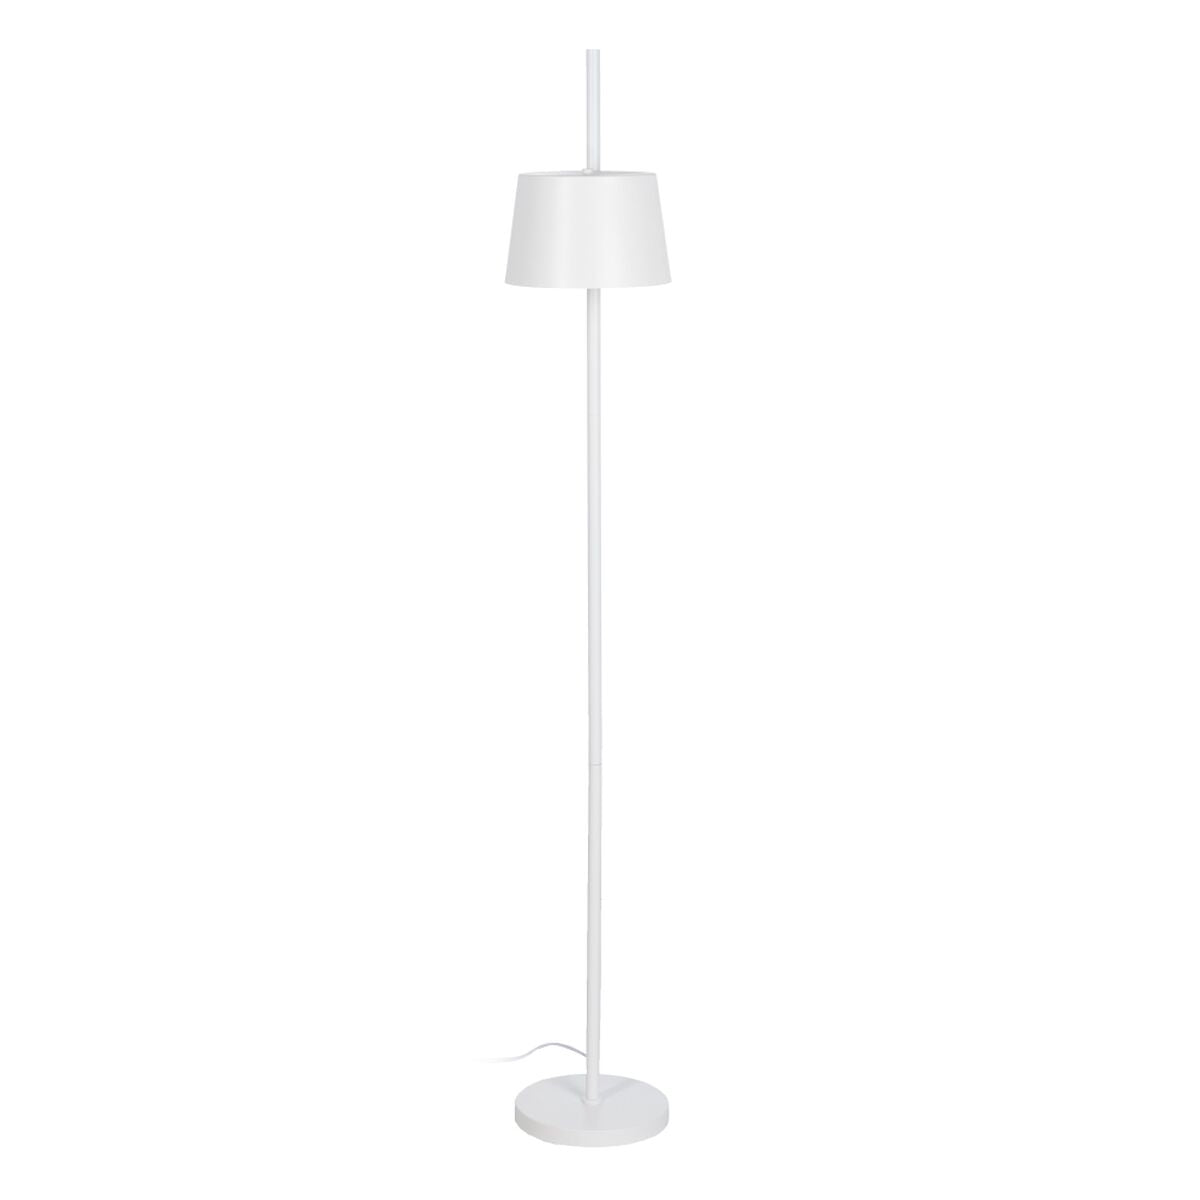 White Metal Floor Lamp 35 x 35 x 150 cm